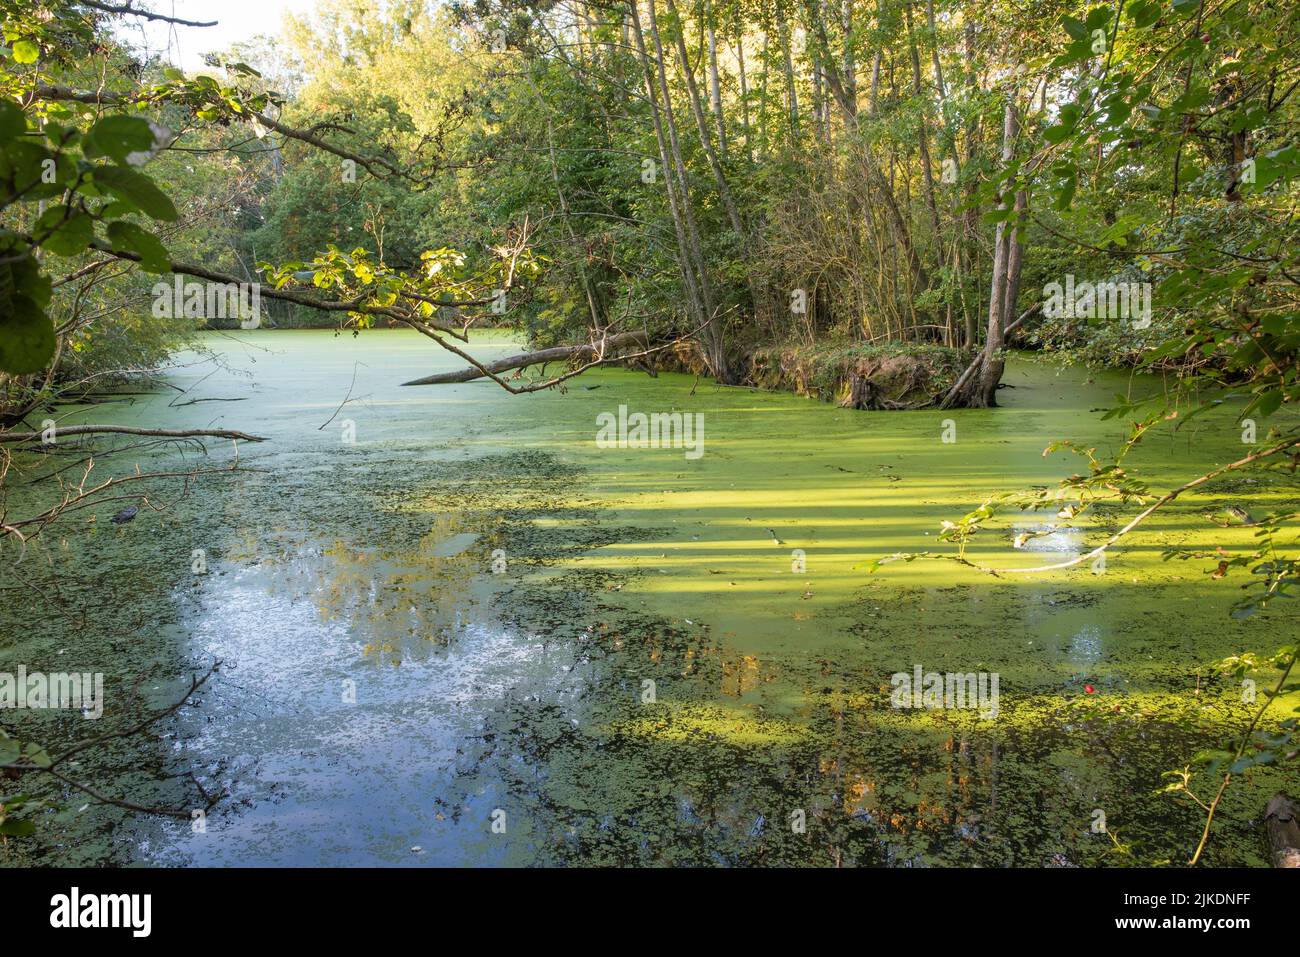 Small pond covered with water lenses, Eure-et-Loir department, Centre-Val-de-Loire region, France, Europe. Stock Photo